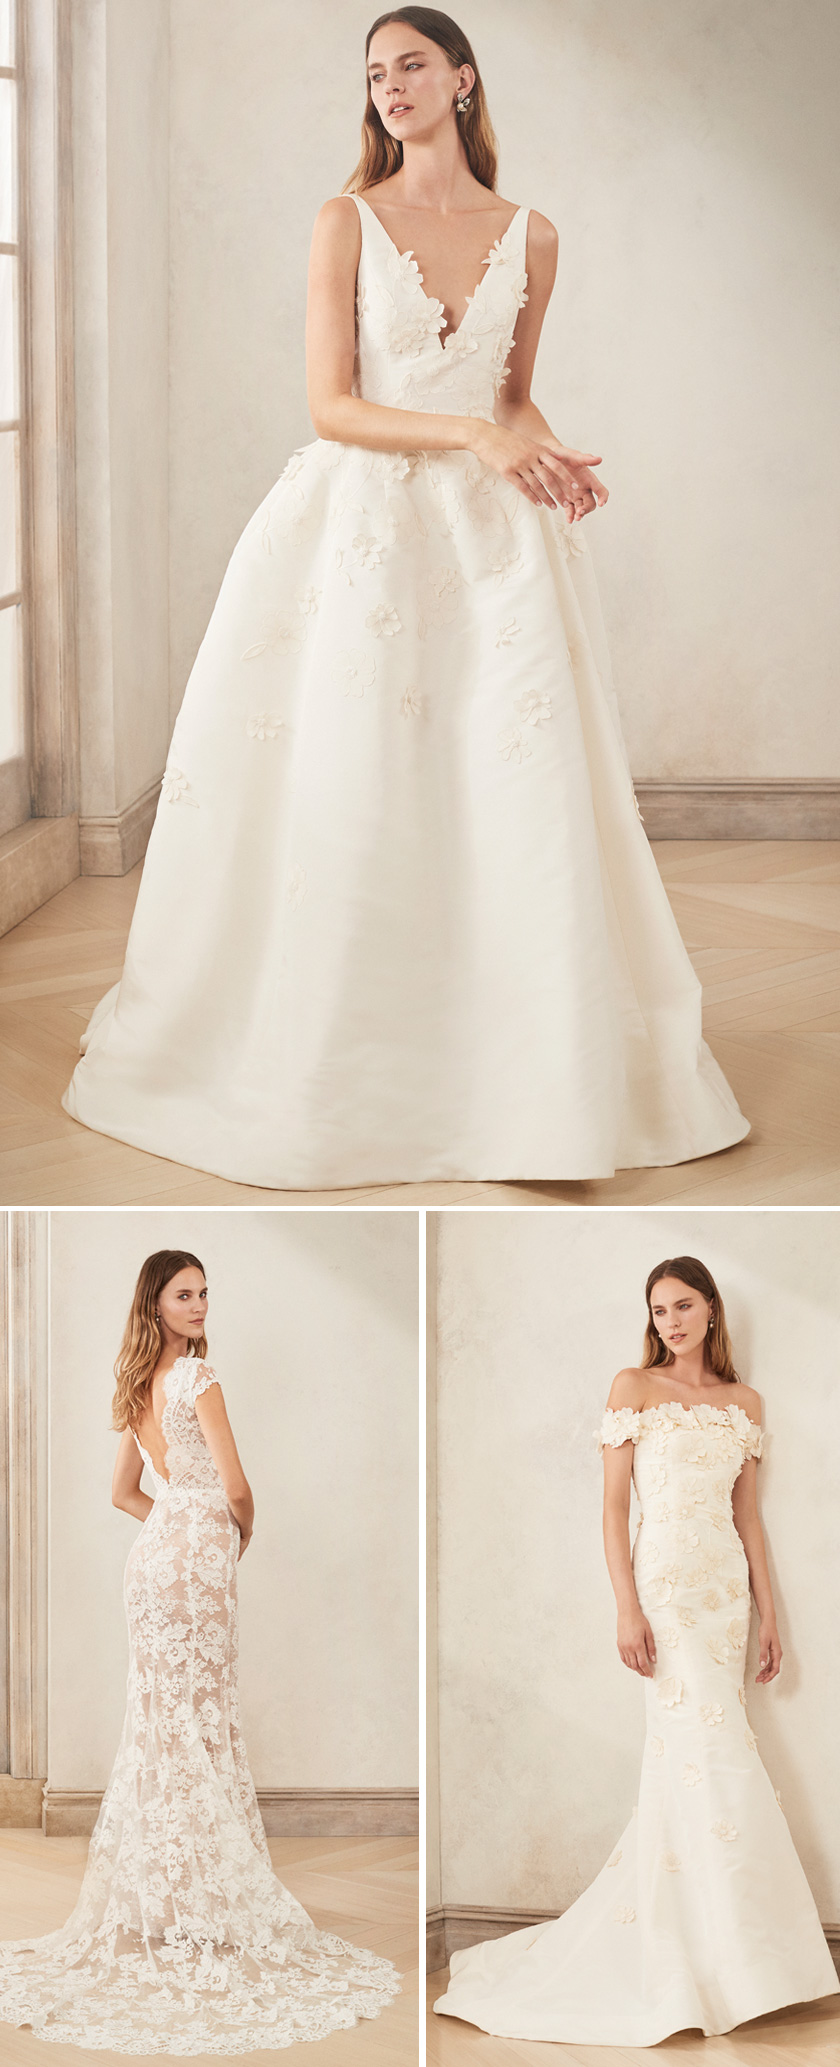 Oscar de la Renta Fall 2020 bridal collection features strapless dresses